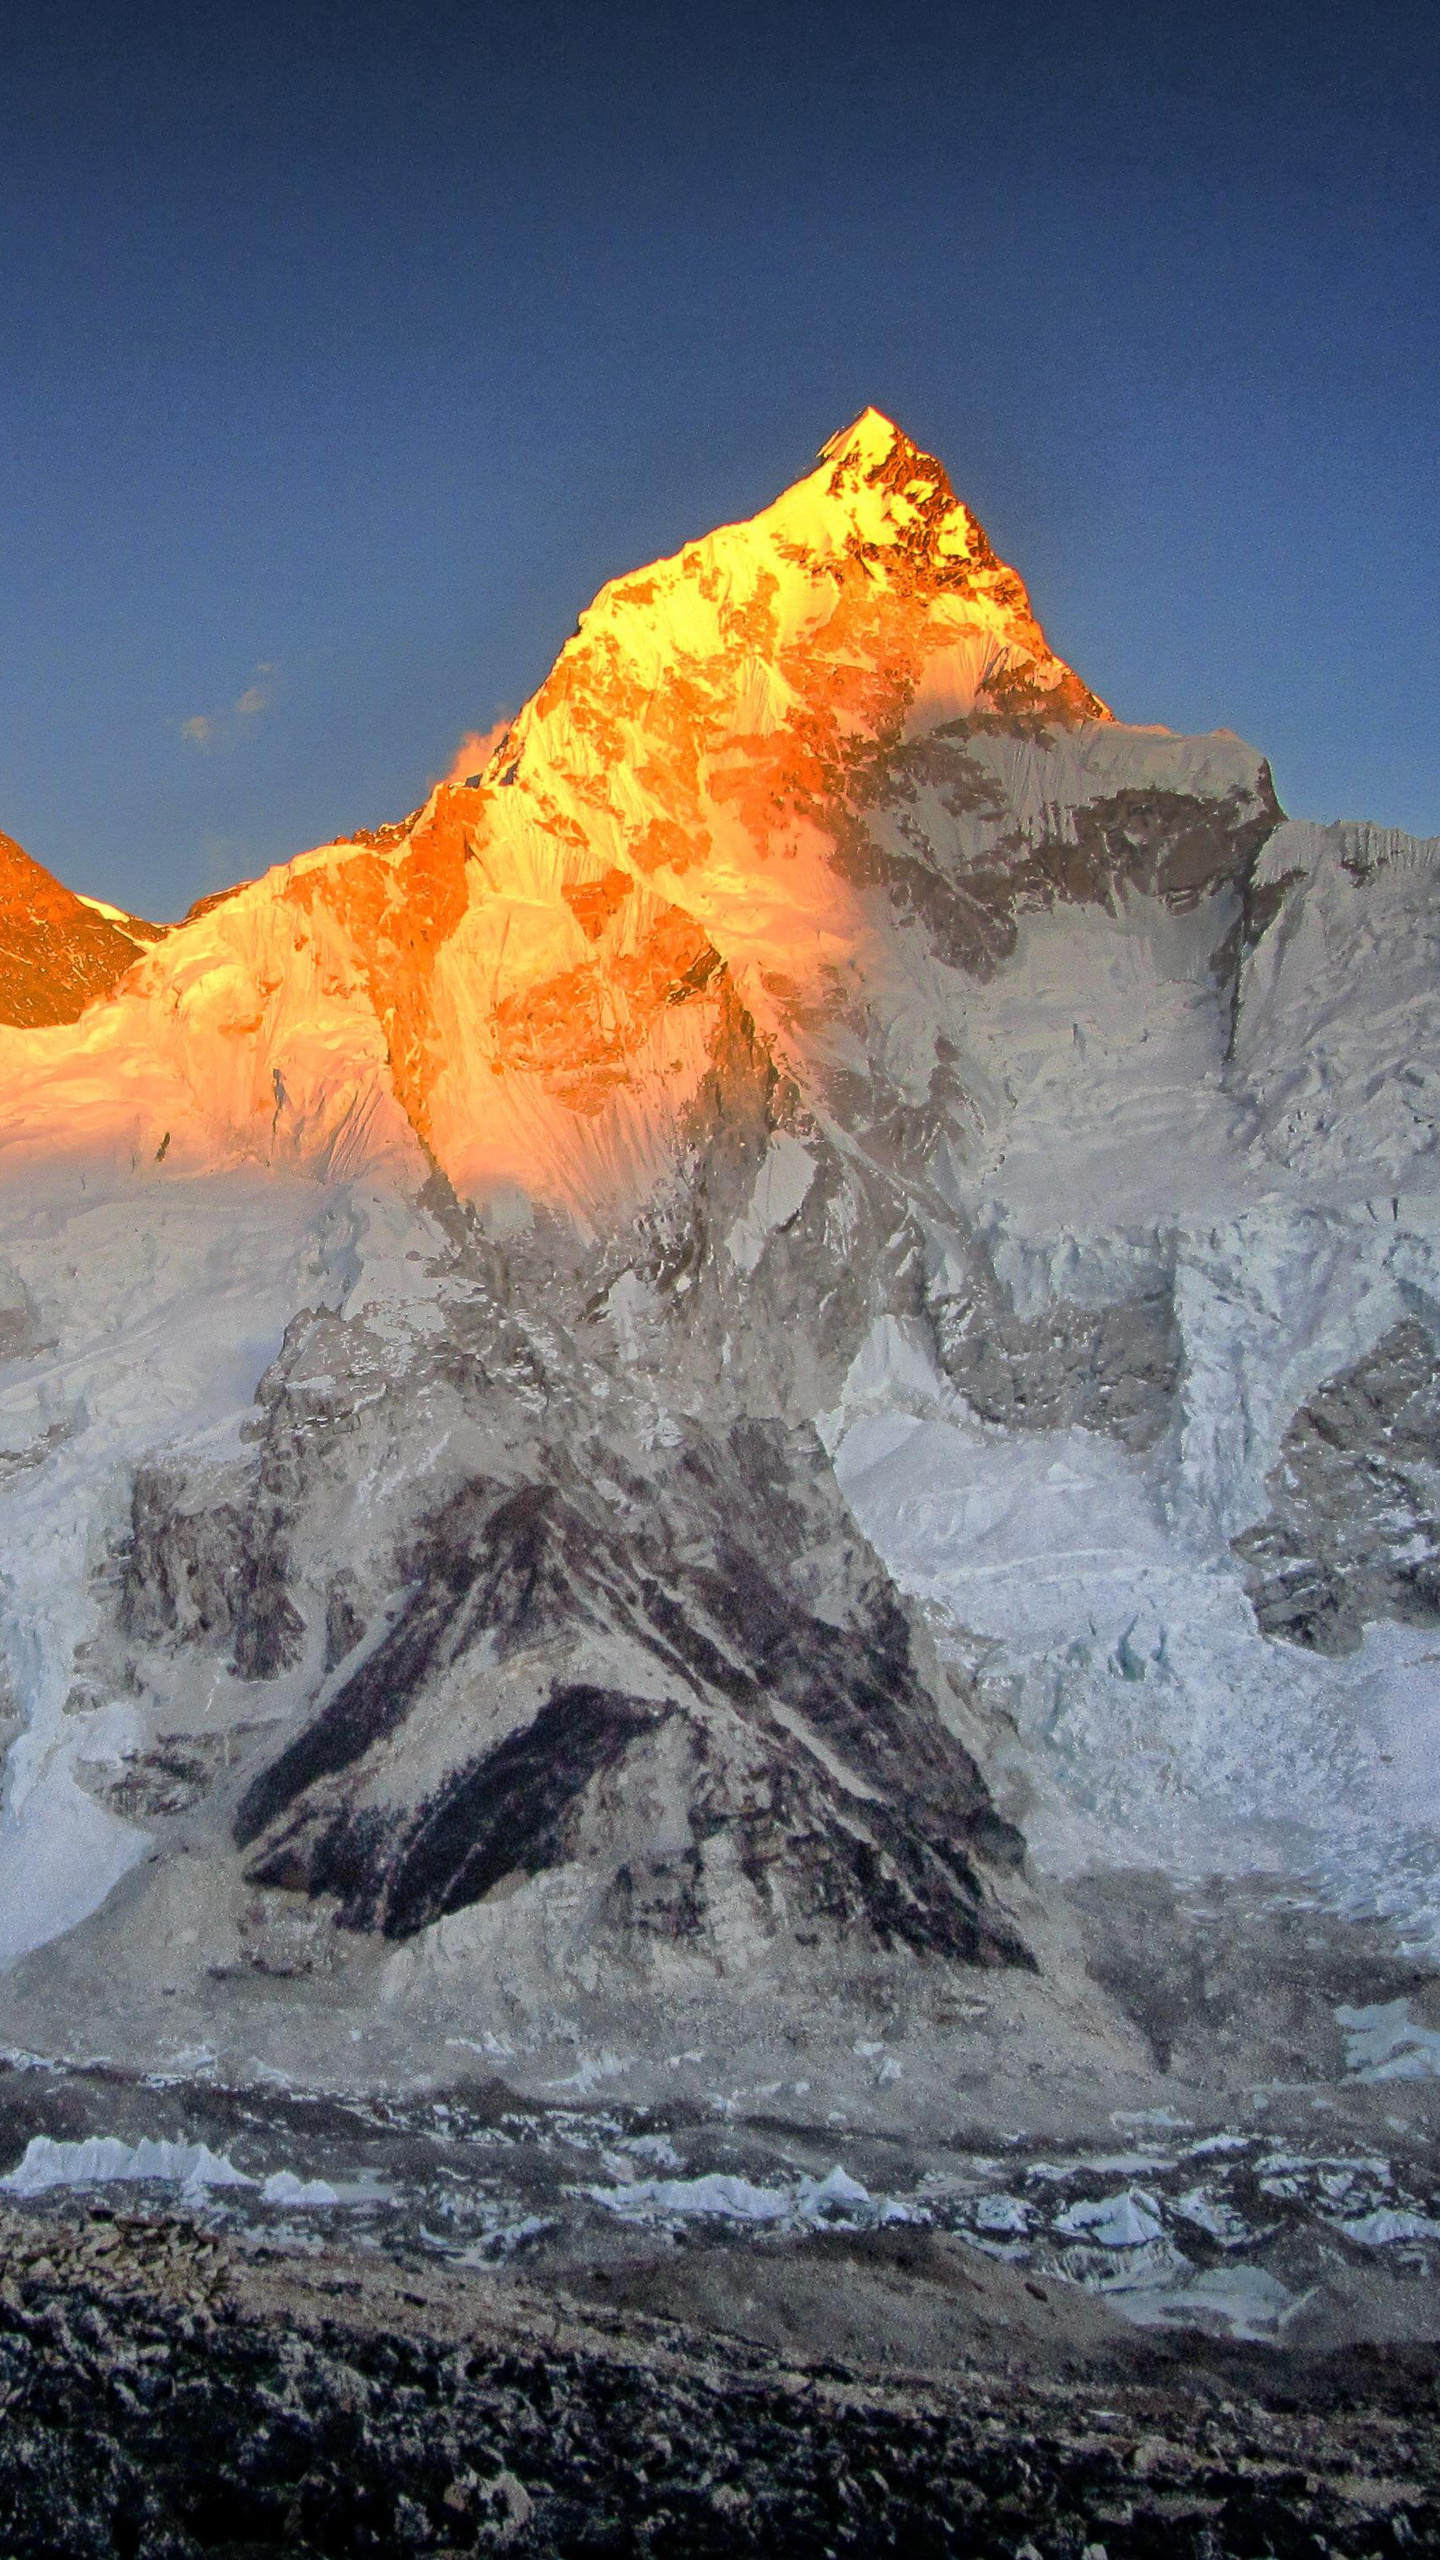 Mount Everest Sunset 4k Samsung Galaxy S S7 , Google Pixel XL , Nexus 6P , LG G5 HD 4k Wallpaper, Image, Background, Photo and Picture